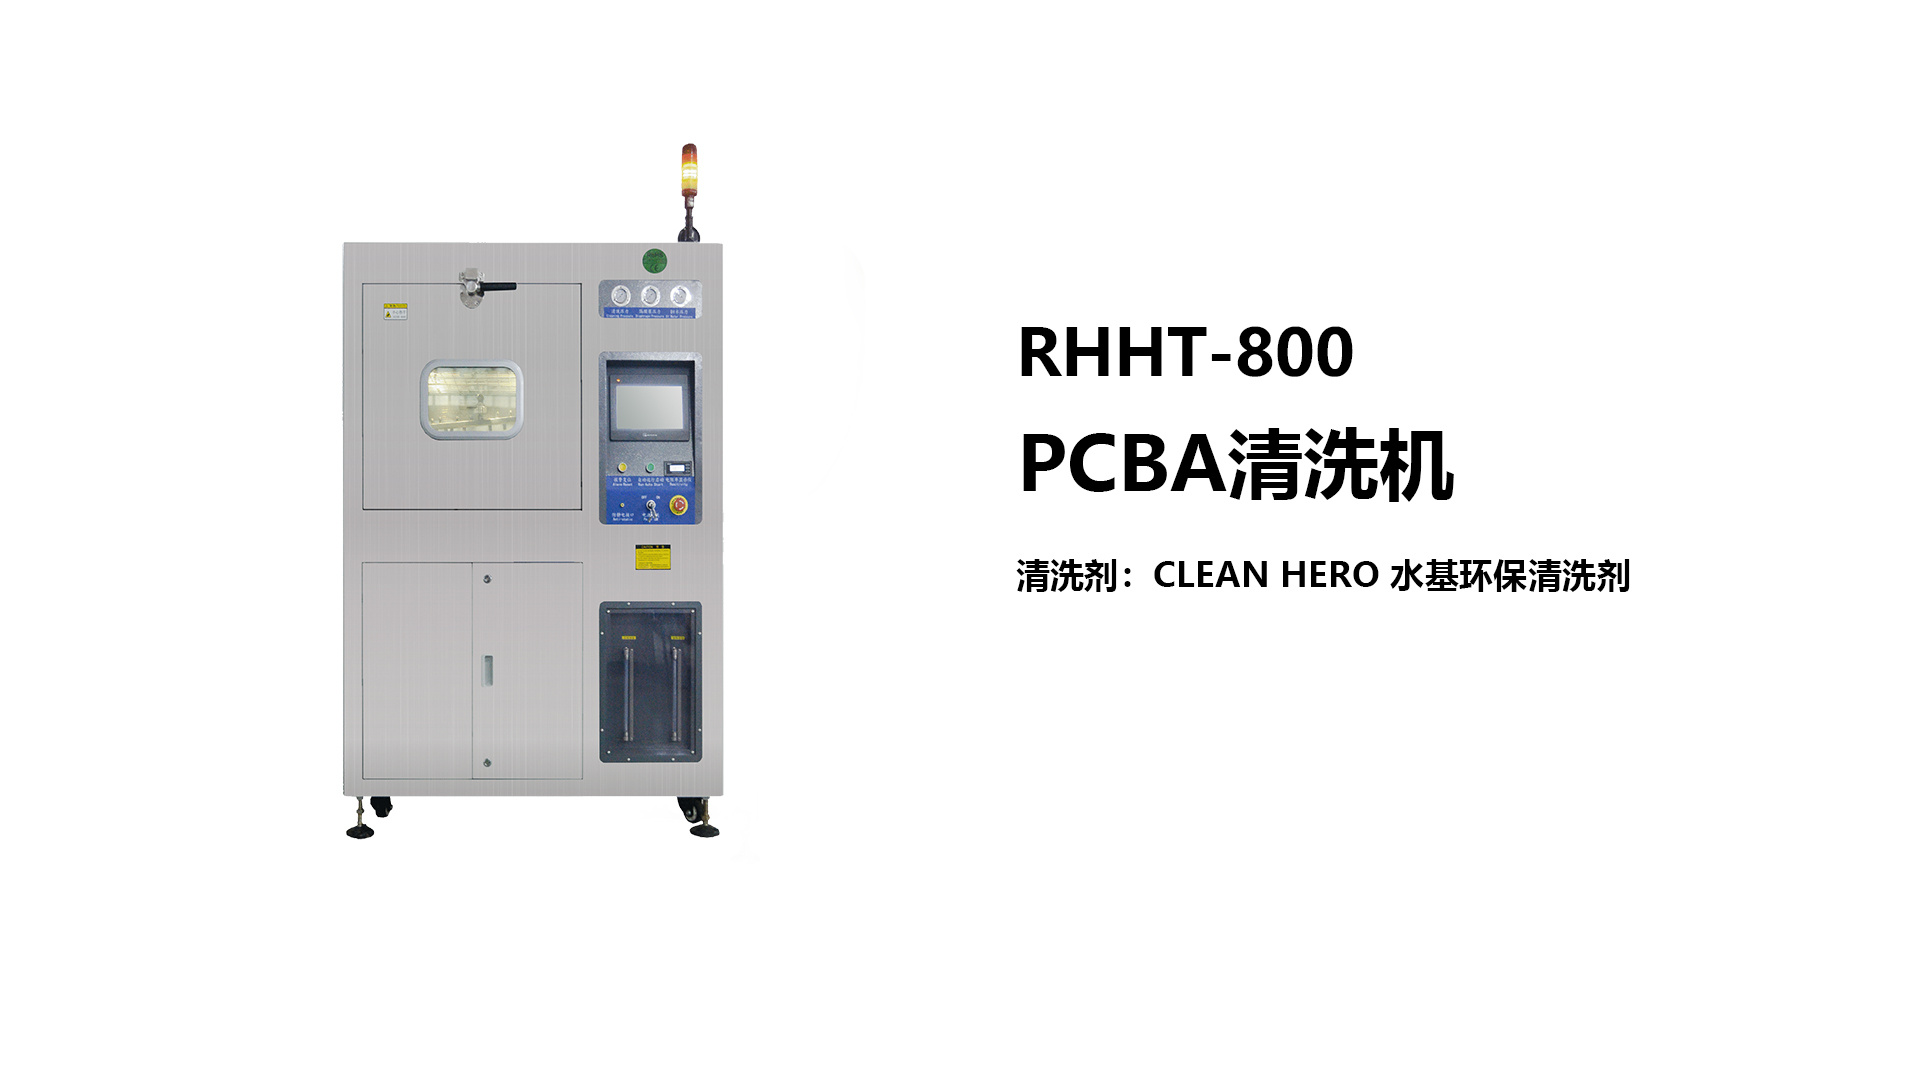  RHHT-800离线式PCBA清洗机